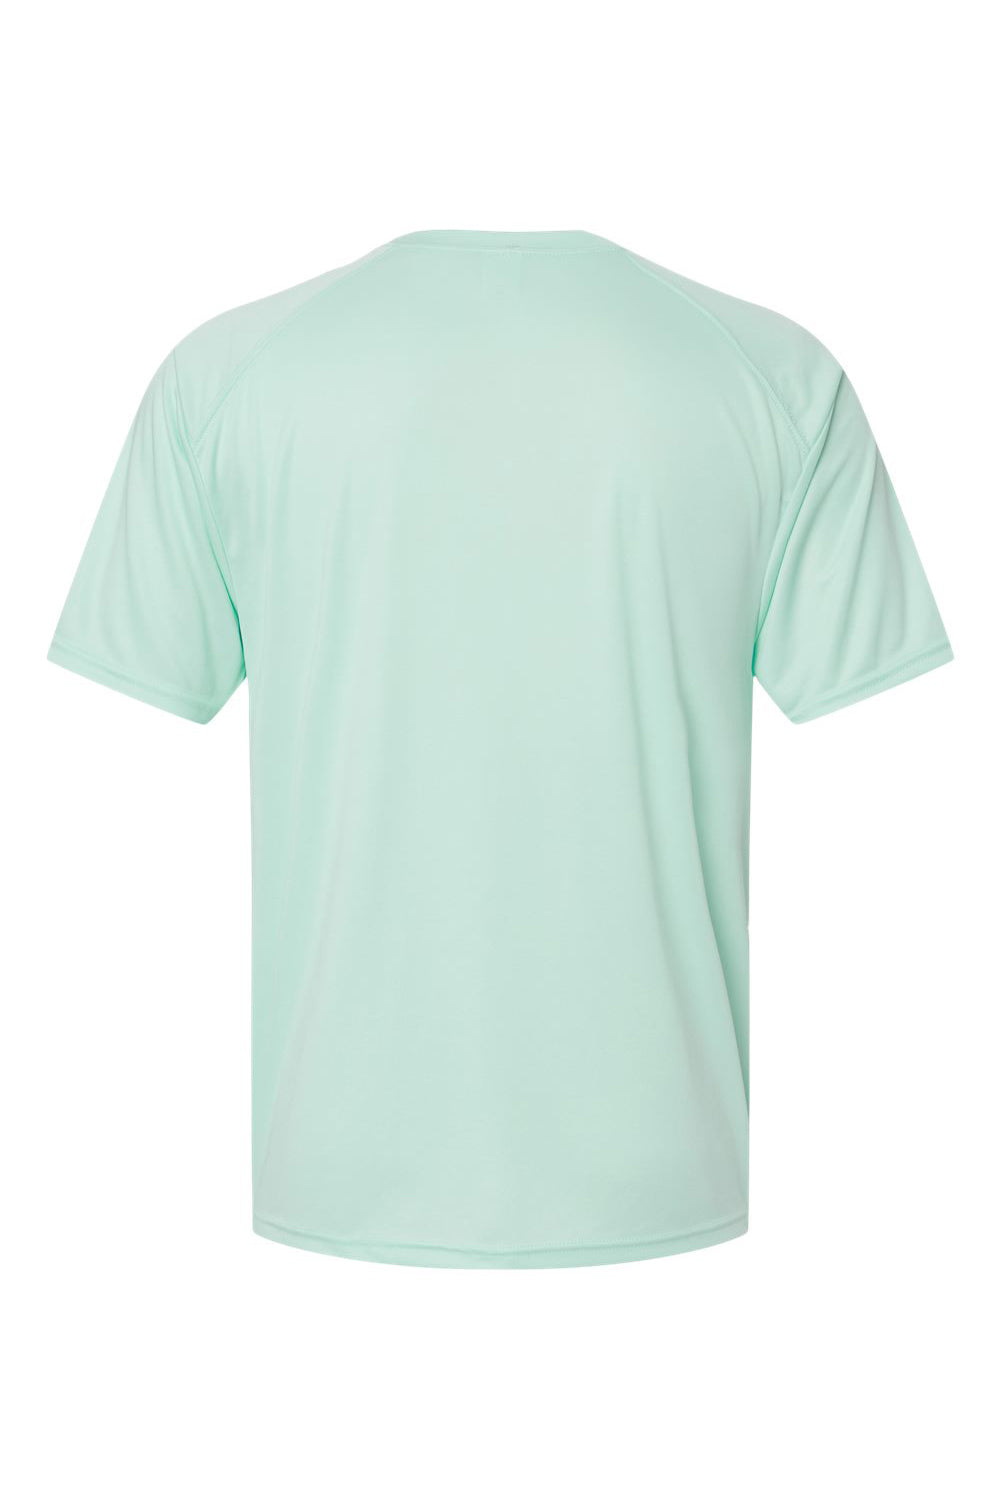 Paragon 200 Mens Islander Performance Short Sleeve Crewneck T-Shirt Mint Green Flat Back